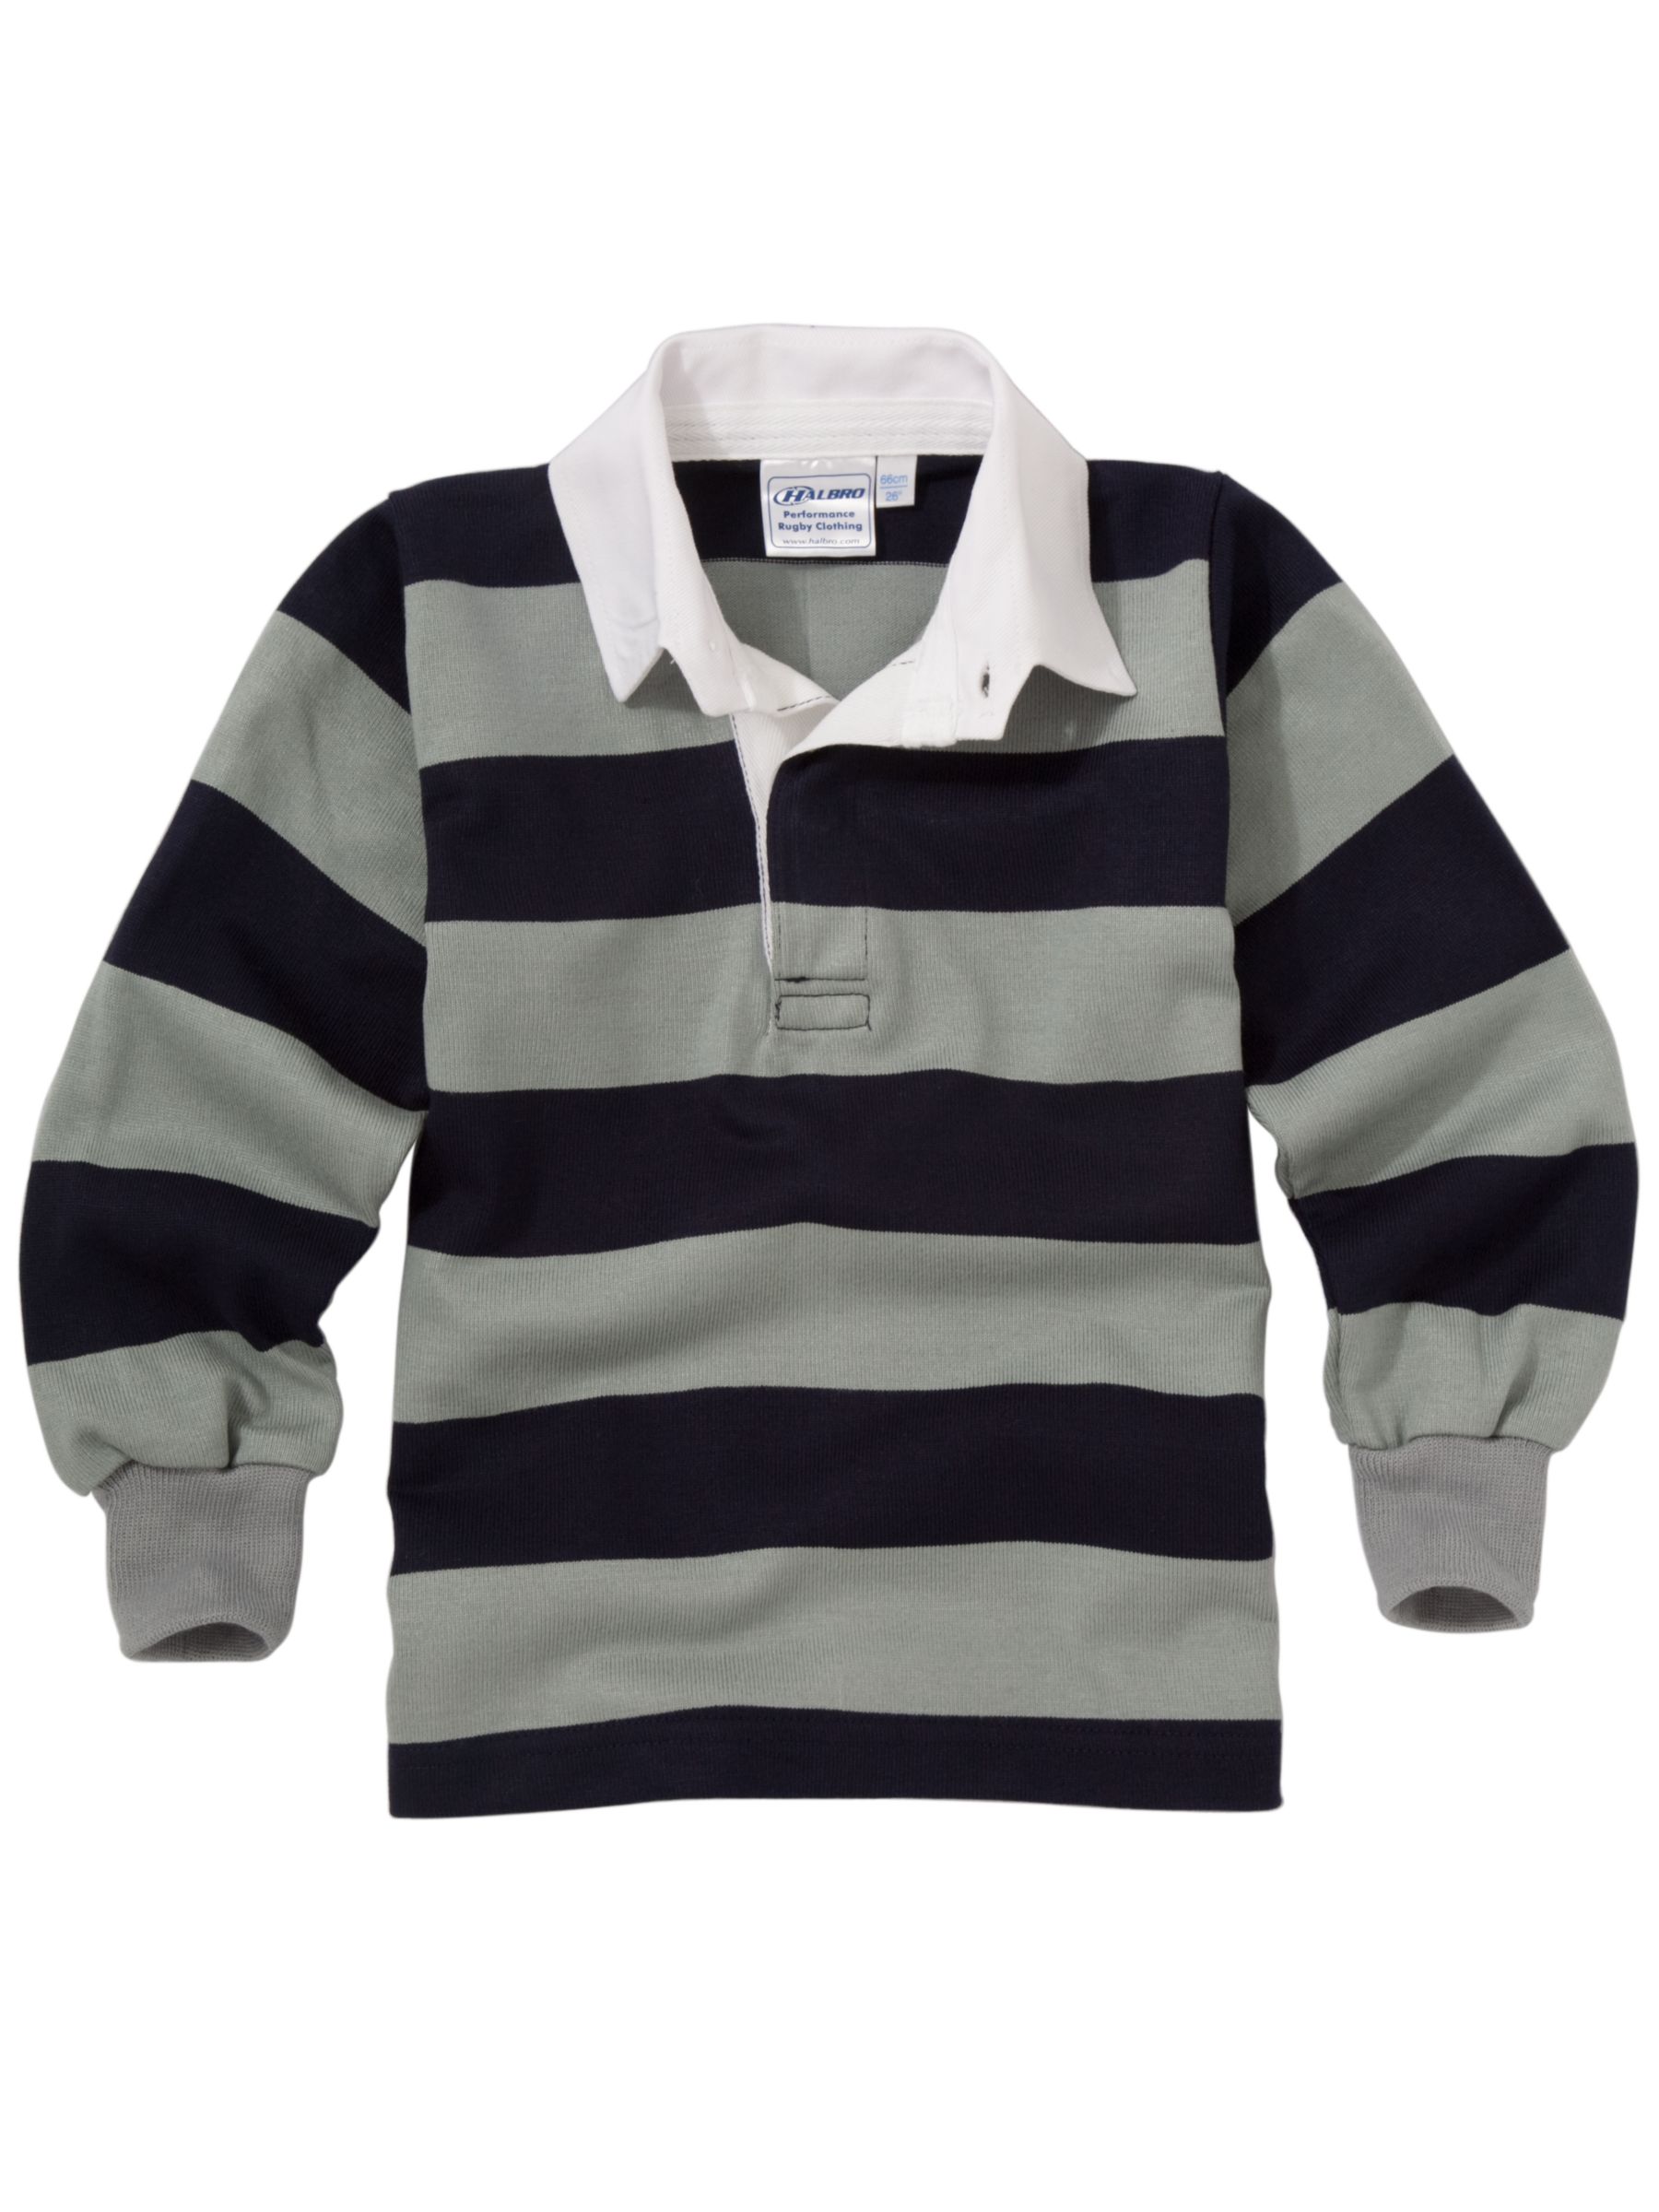 School Unisex Sports Rugby Shirt, Navy/grey